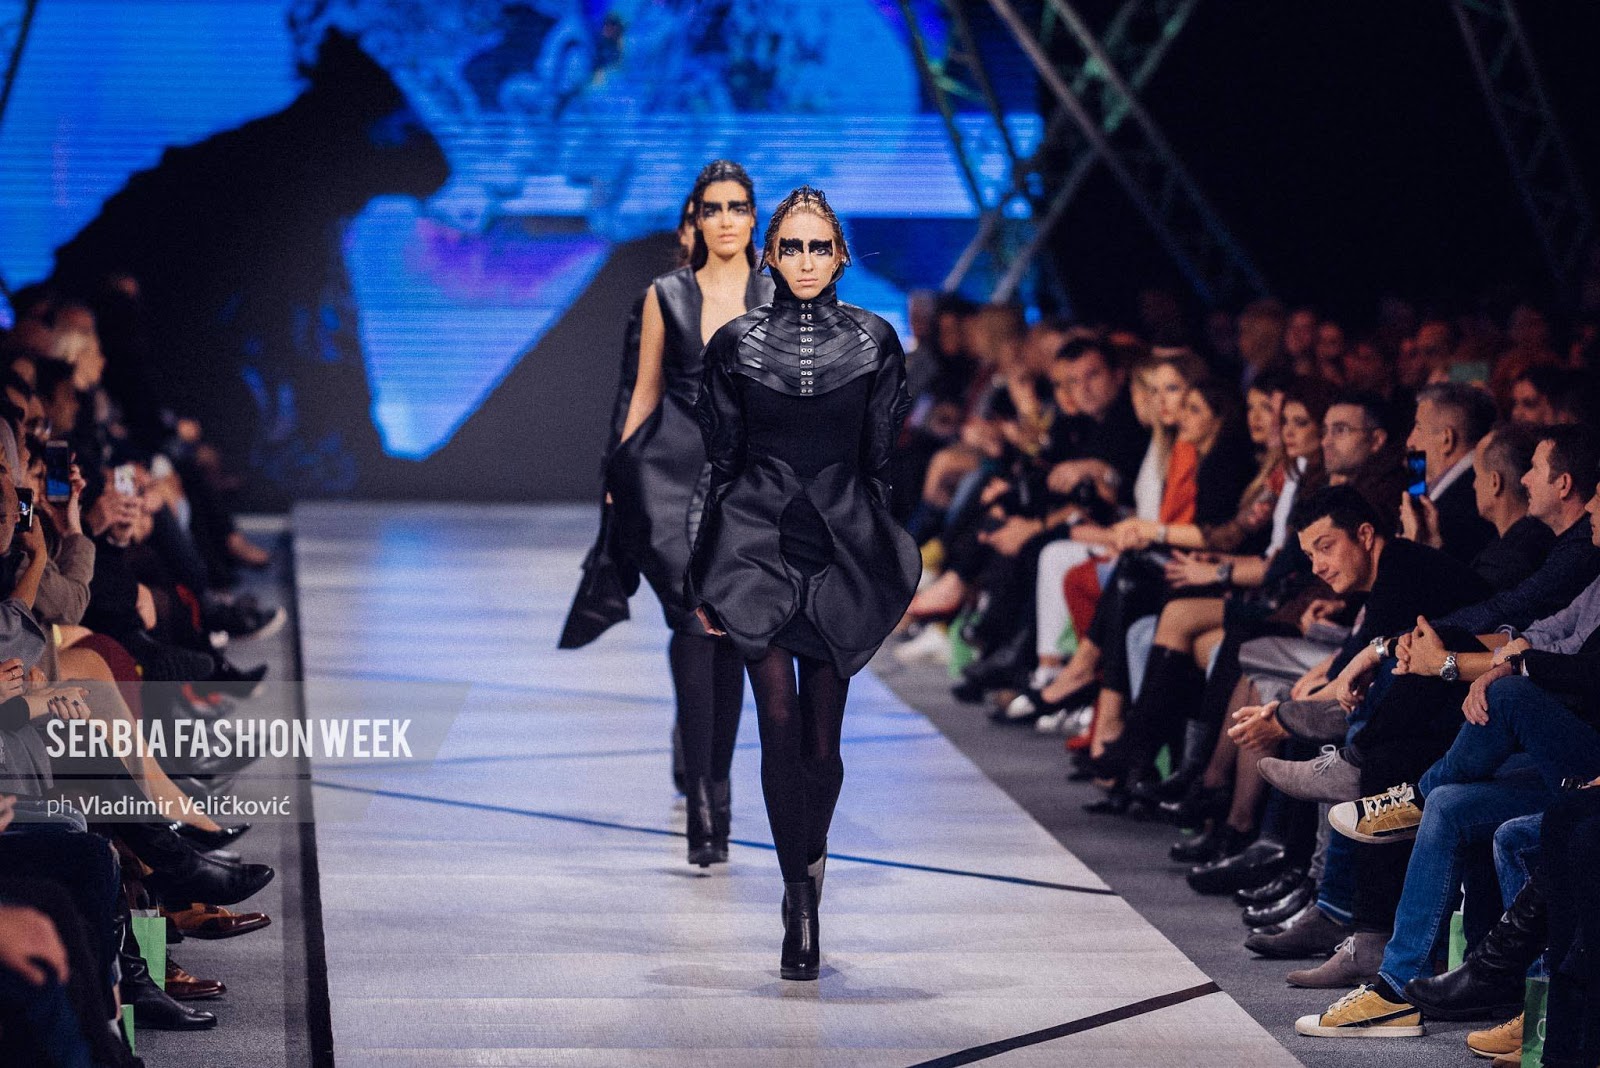 FASHIONCLASH BLOG: Fashion Talent Design Competition at Serbia Fashion Week